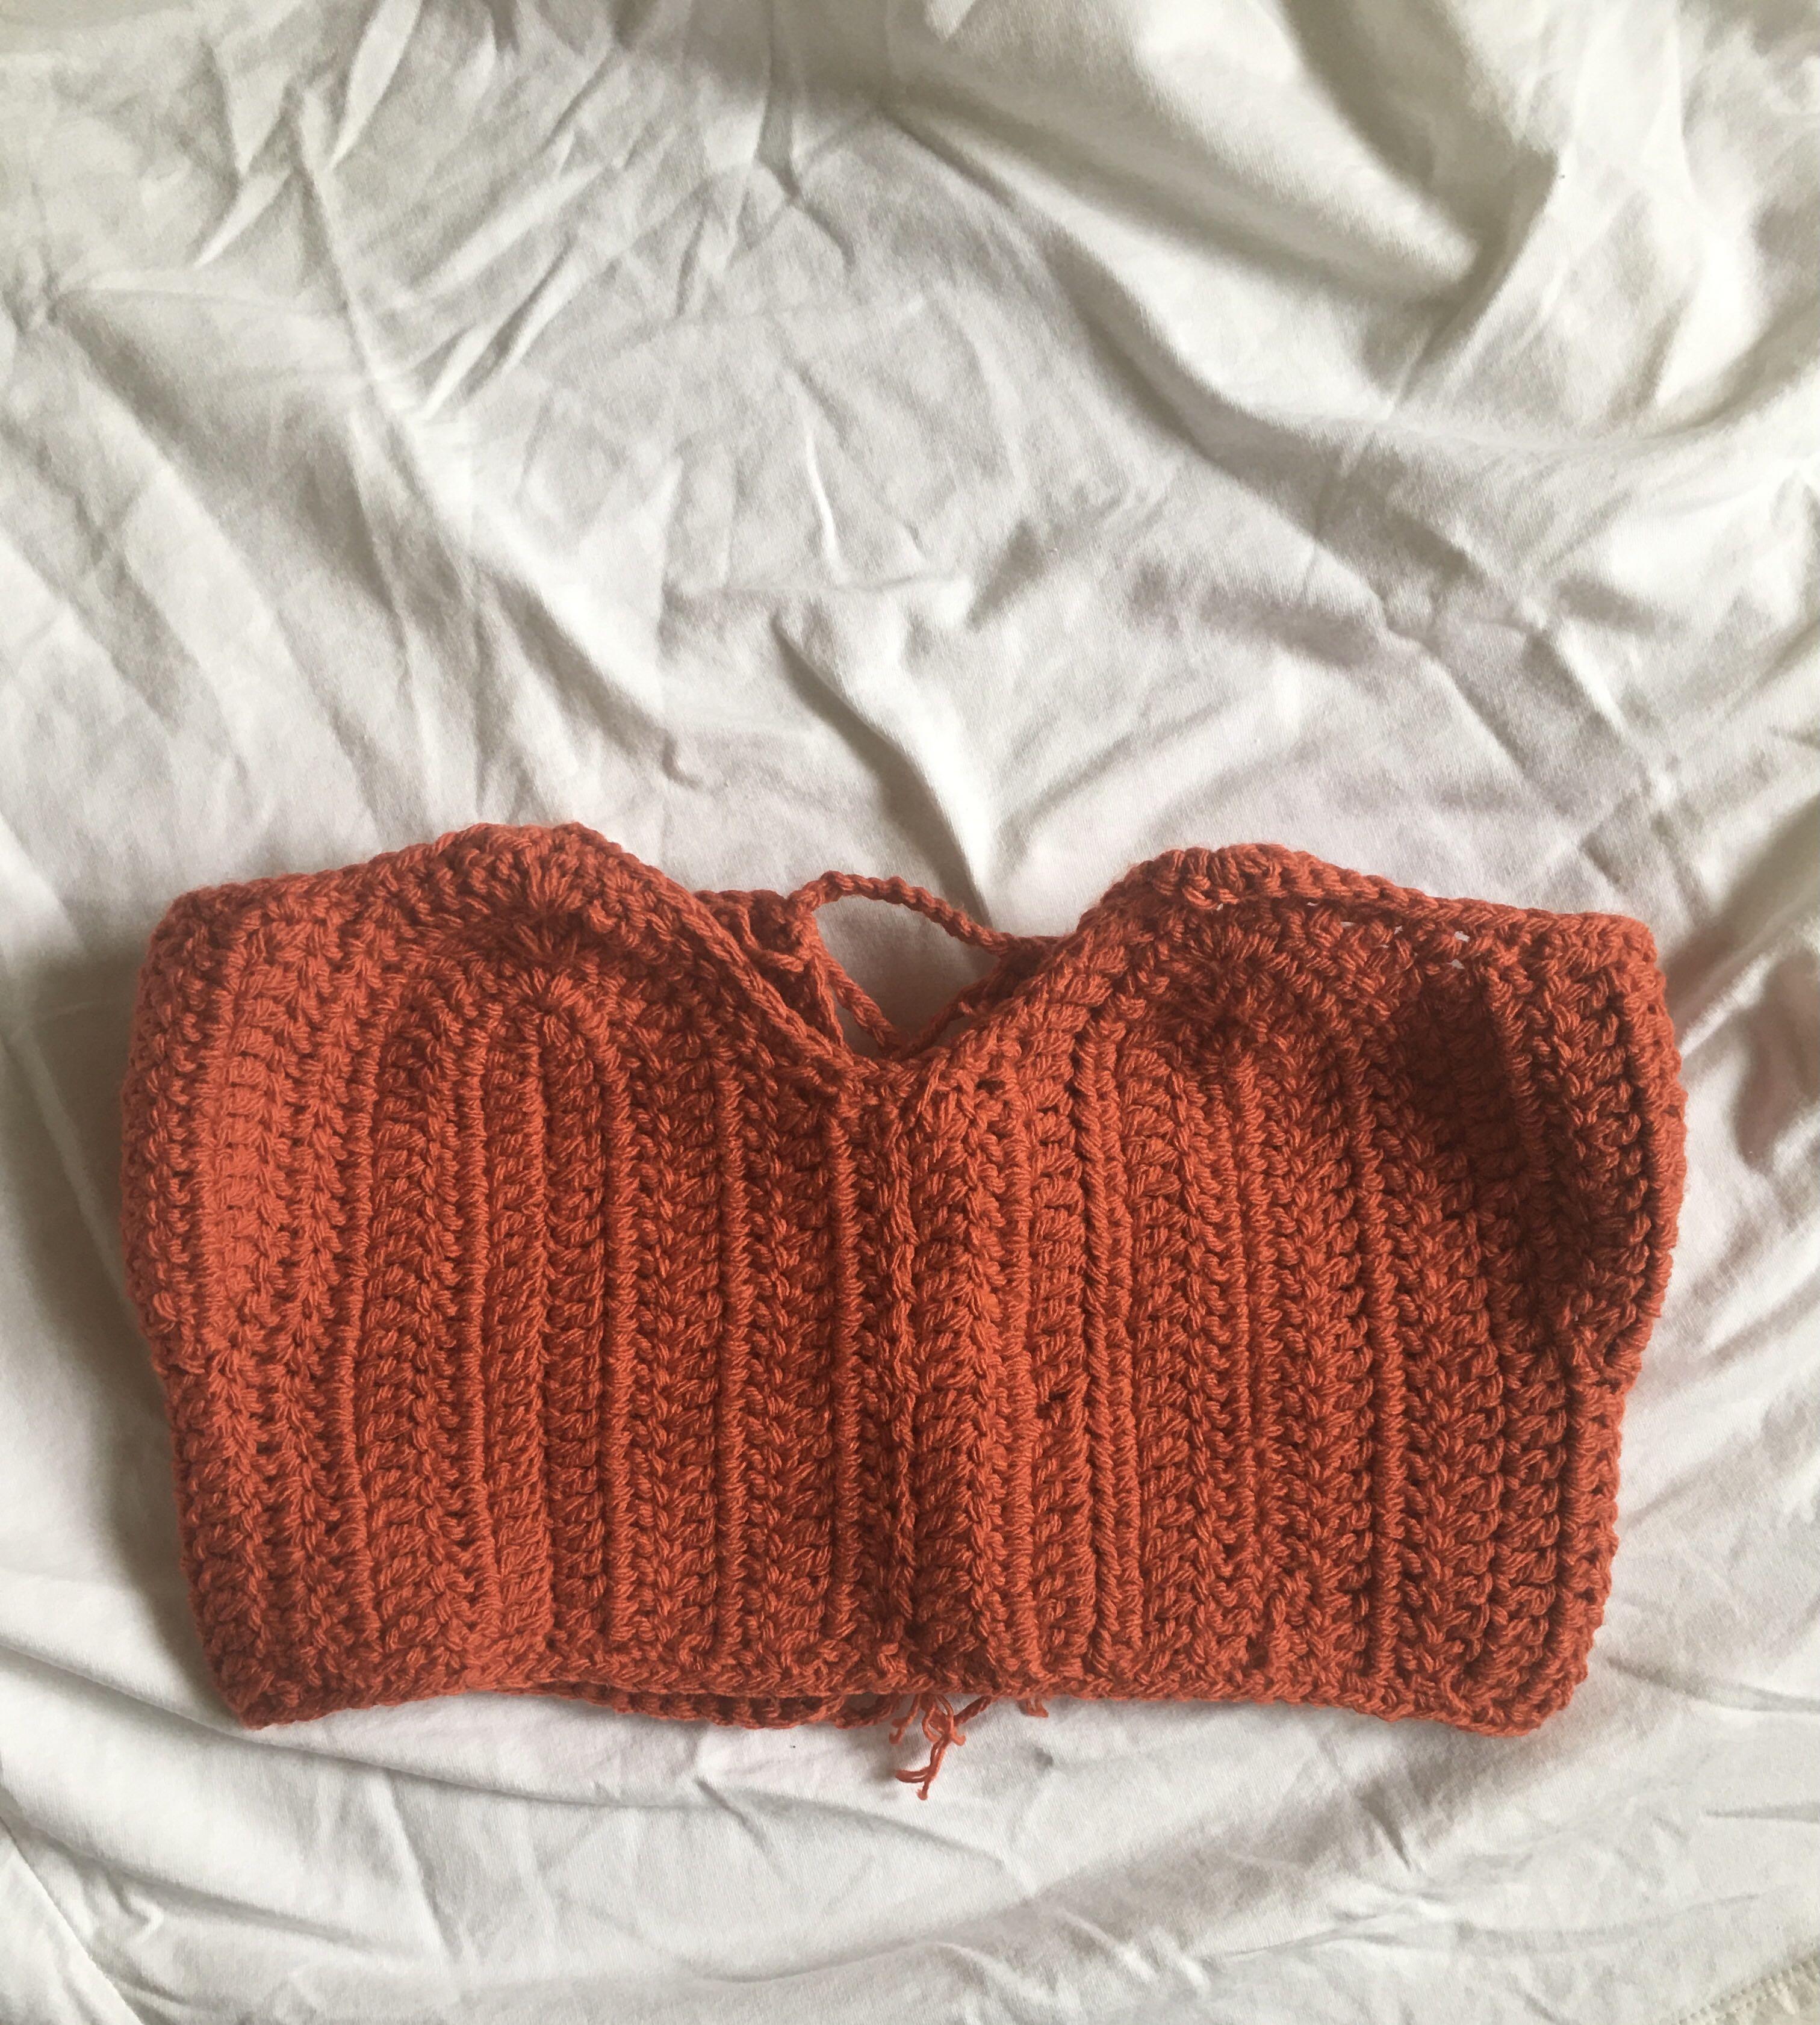 crochet strapless top